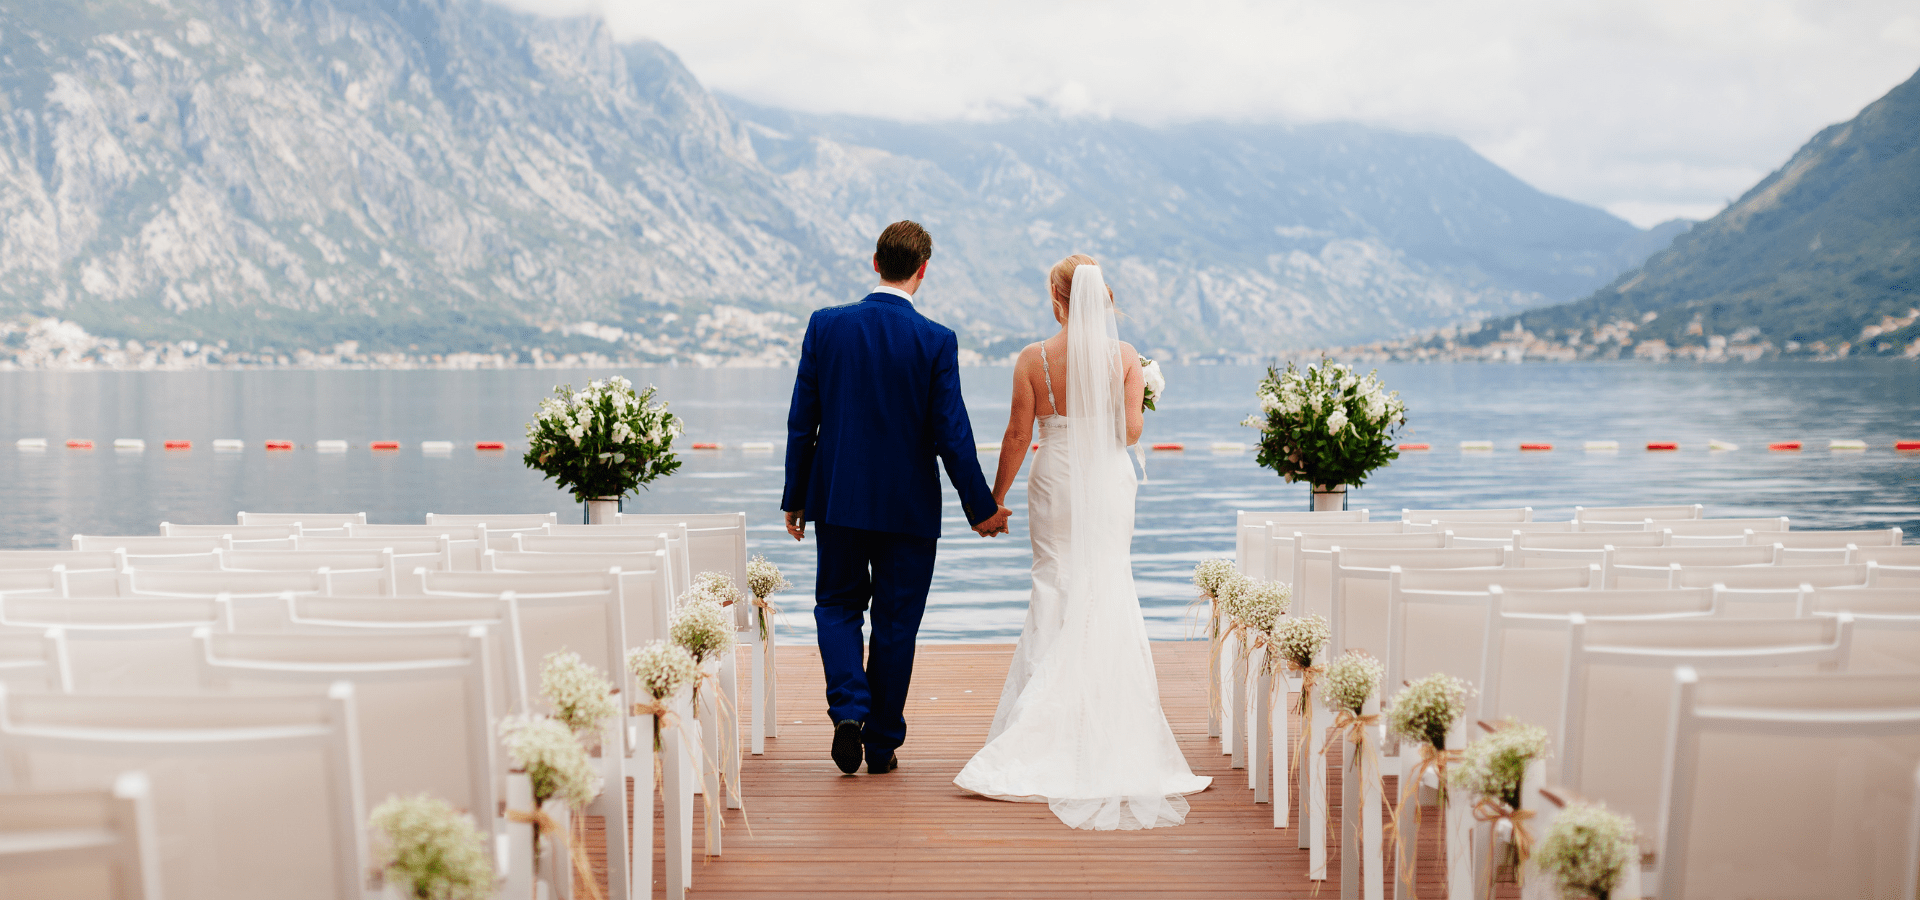 Wedding couple walking down the aisle facing a mountain lake.